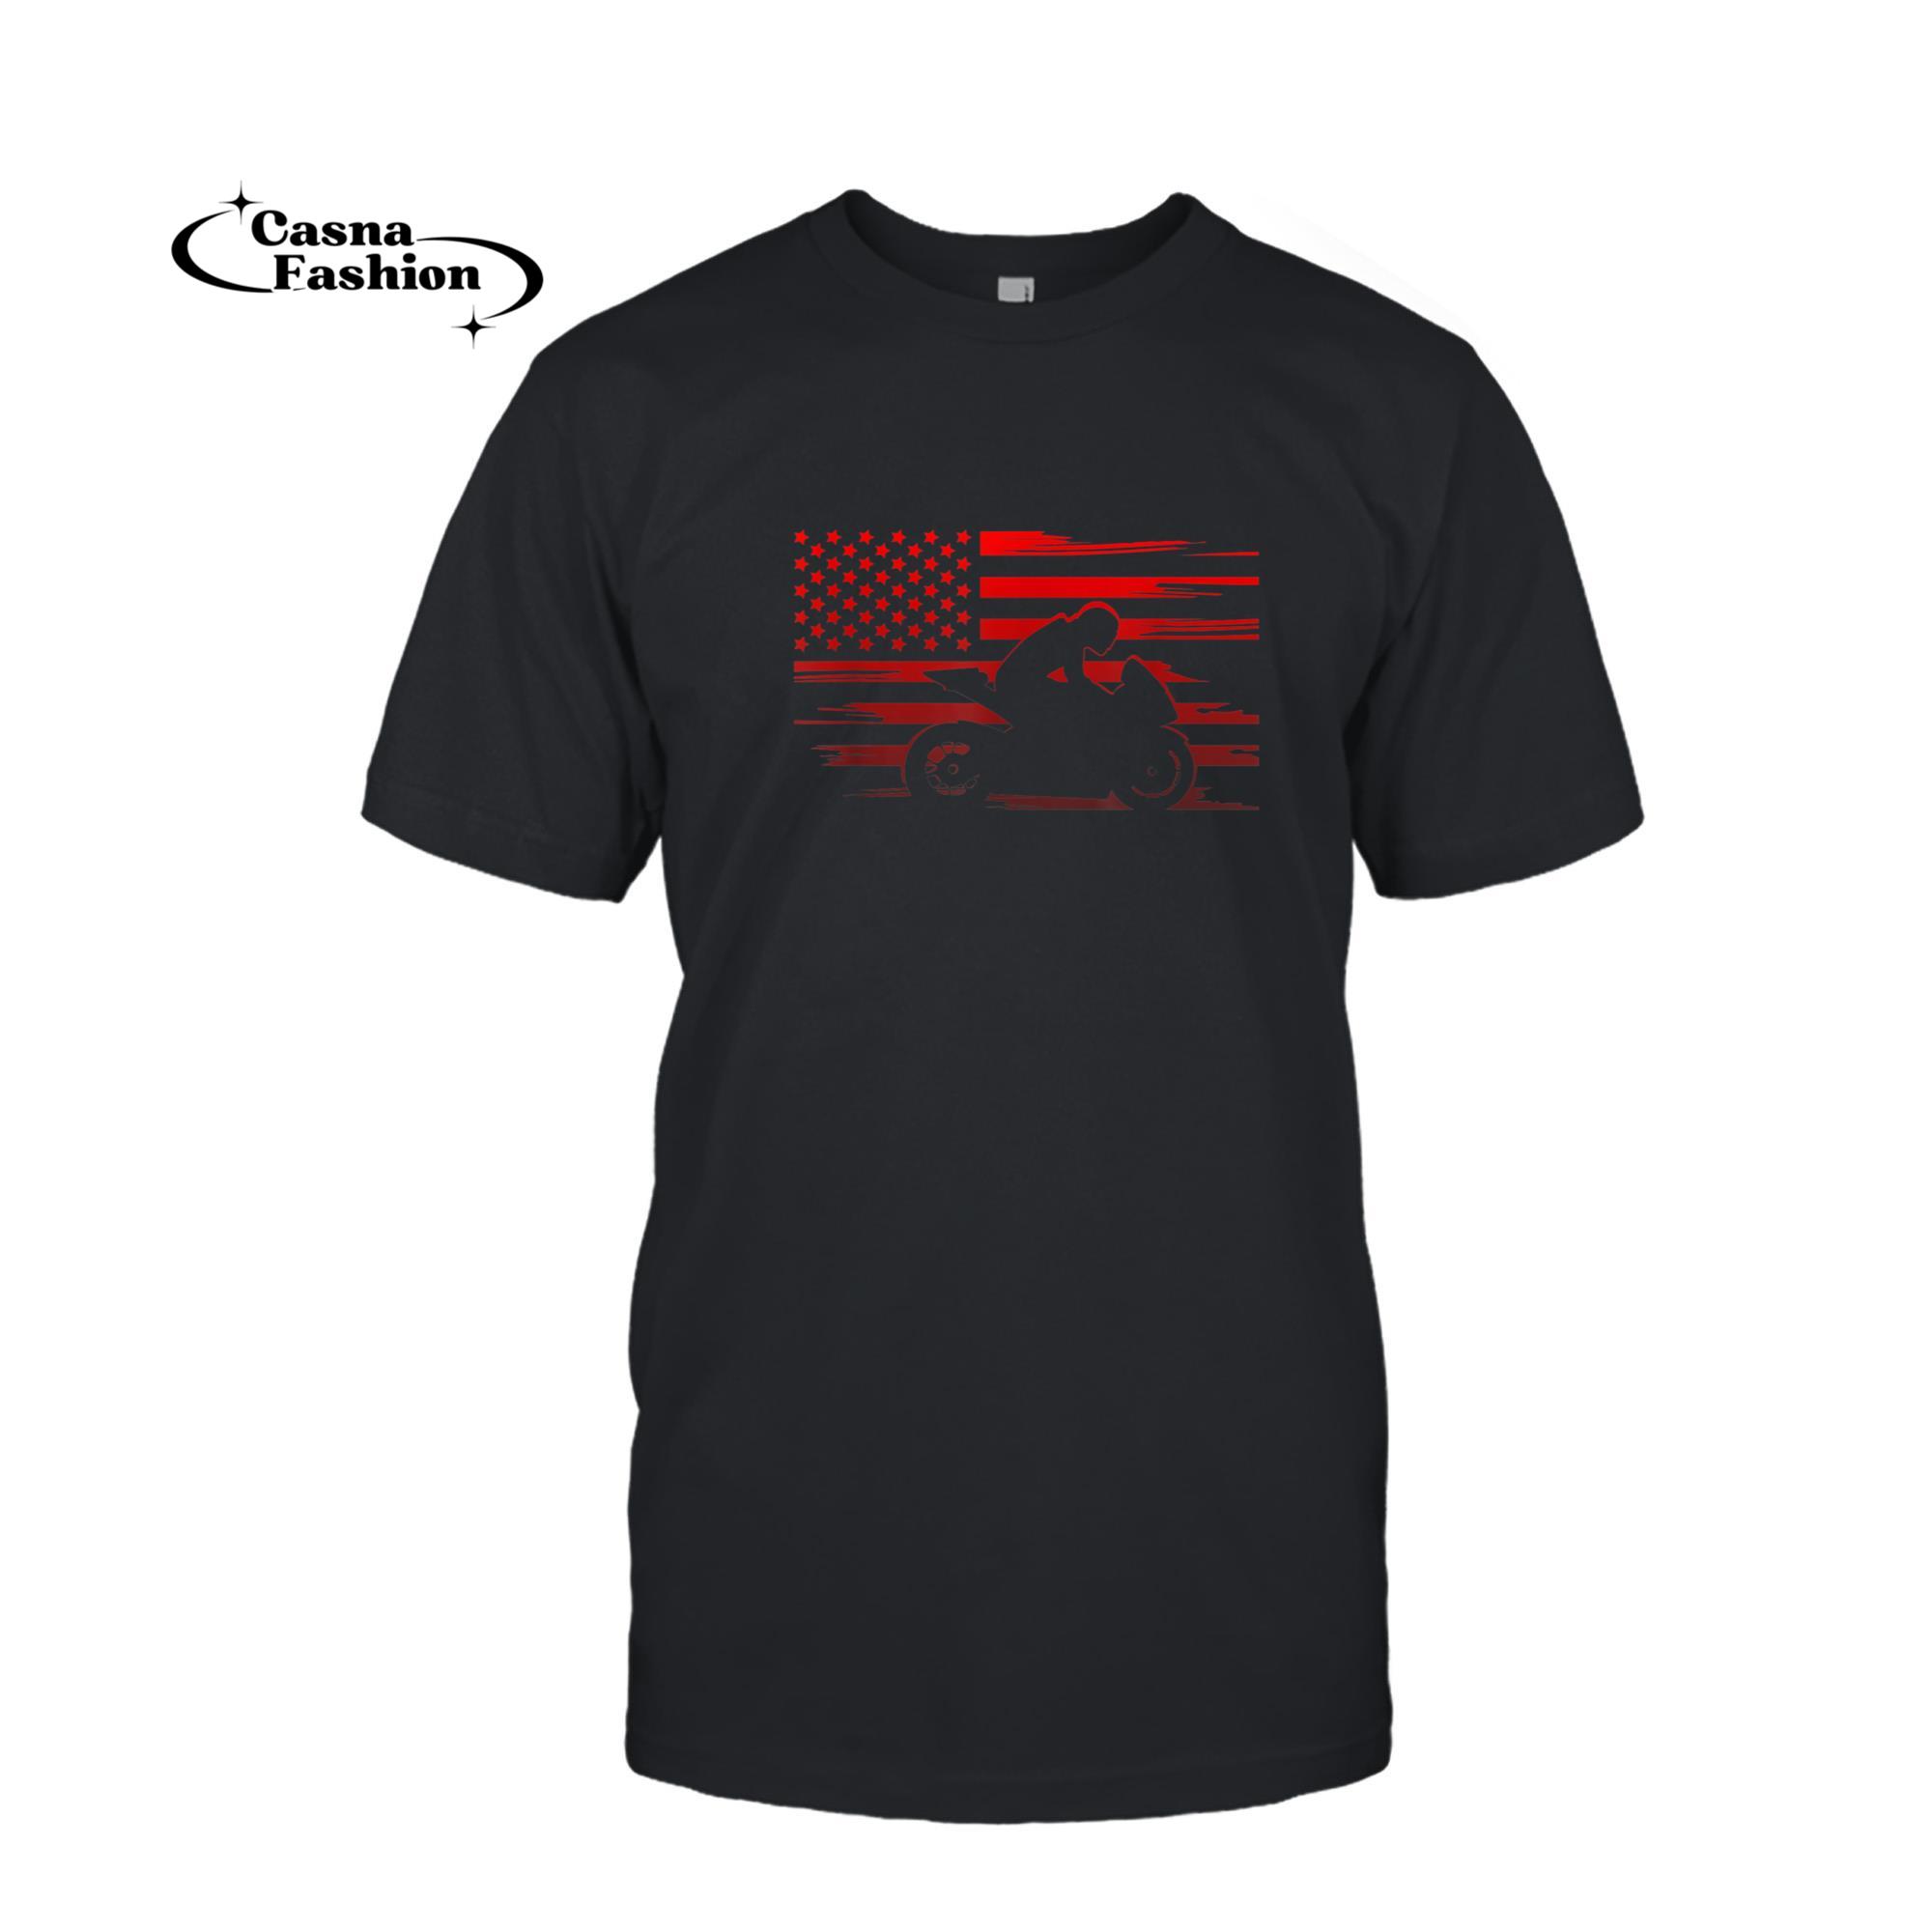 casnafashion_T-shirt_American Flag Motorcycle Clothing - Biker Motorcycle T-Shirt_T-shirt_Black